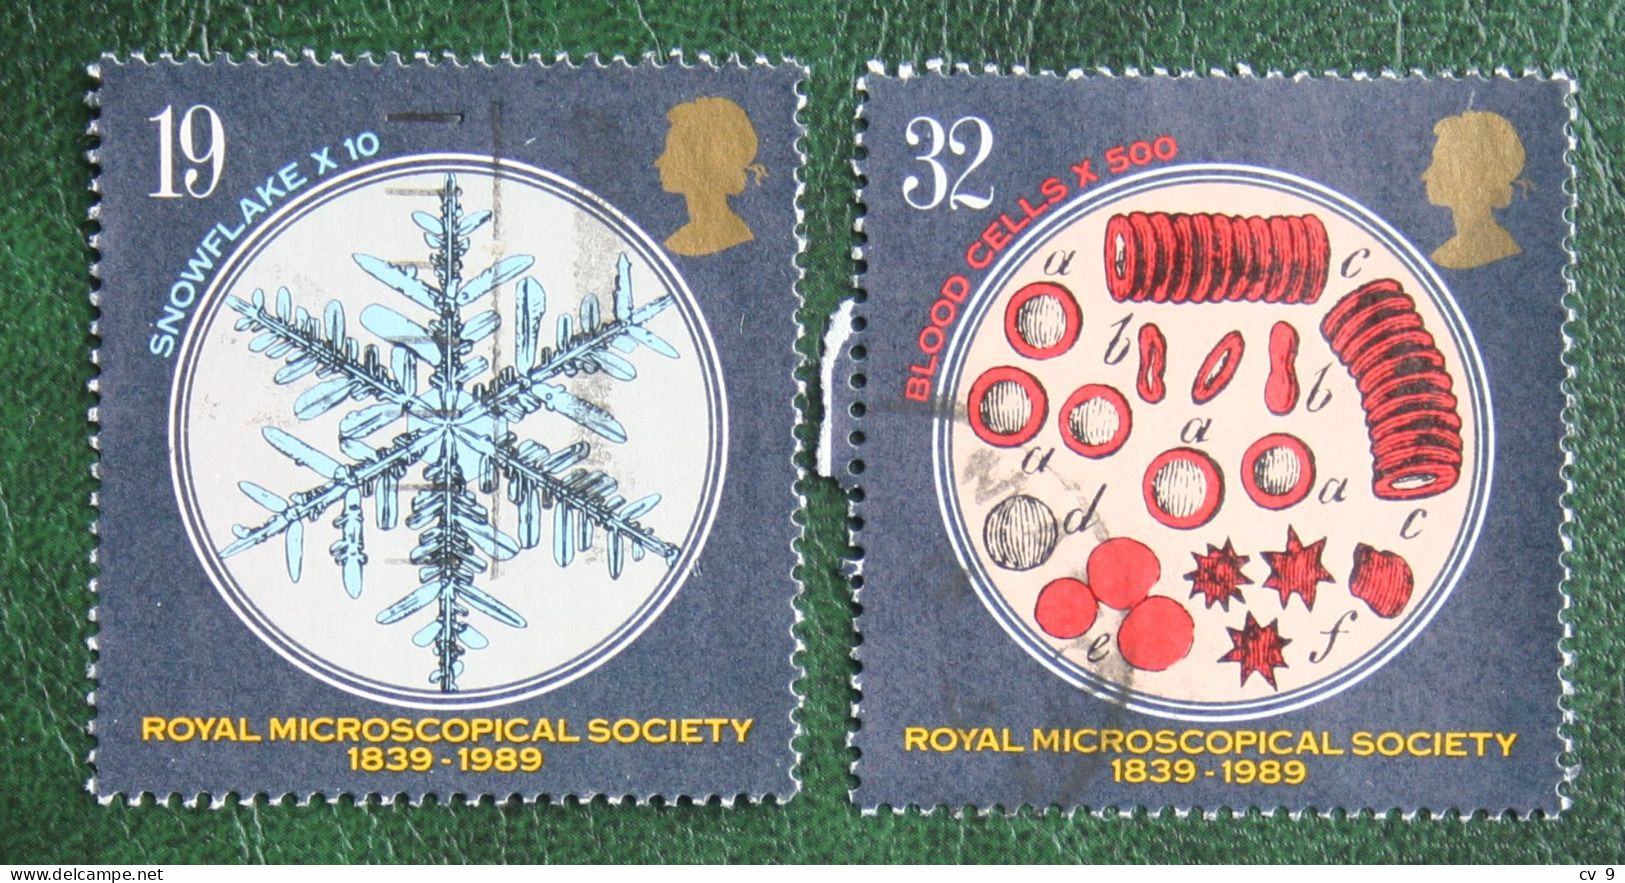 Royal Microscopical Society RMS Mi (1218 1221) 1989 Used Gebruikt Oblitere ENGLAND GRANDE-BRETAGNE GB GREAT BRITAIN - Used Stamps